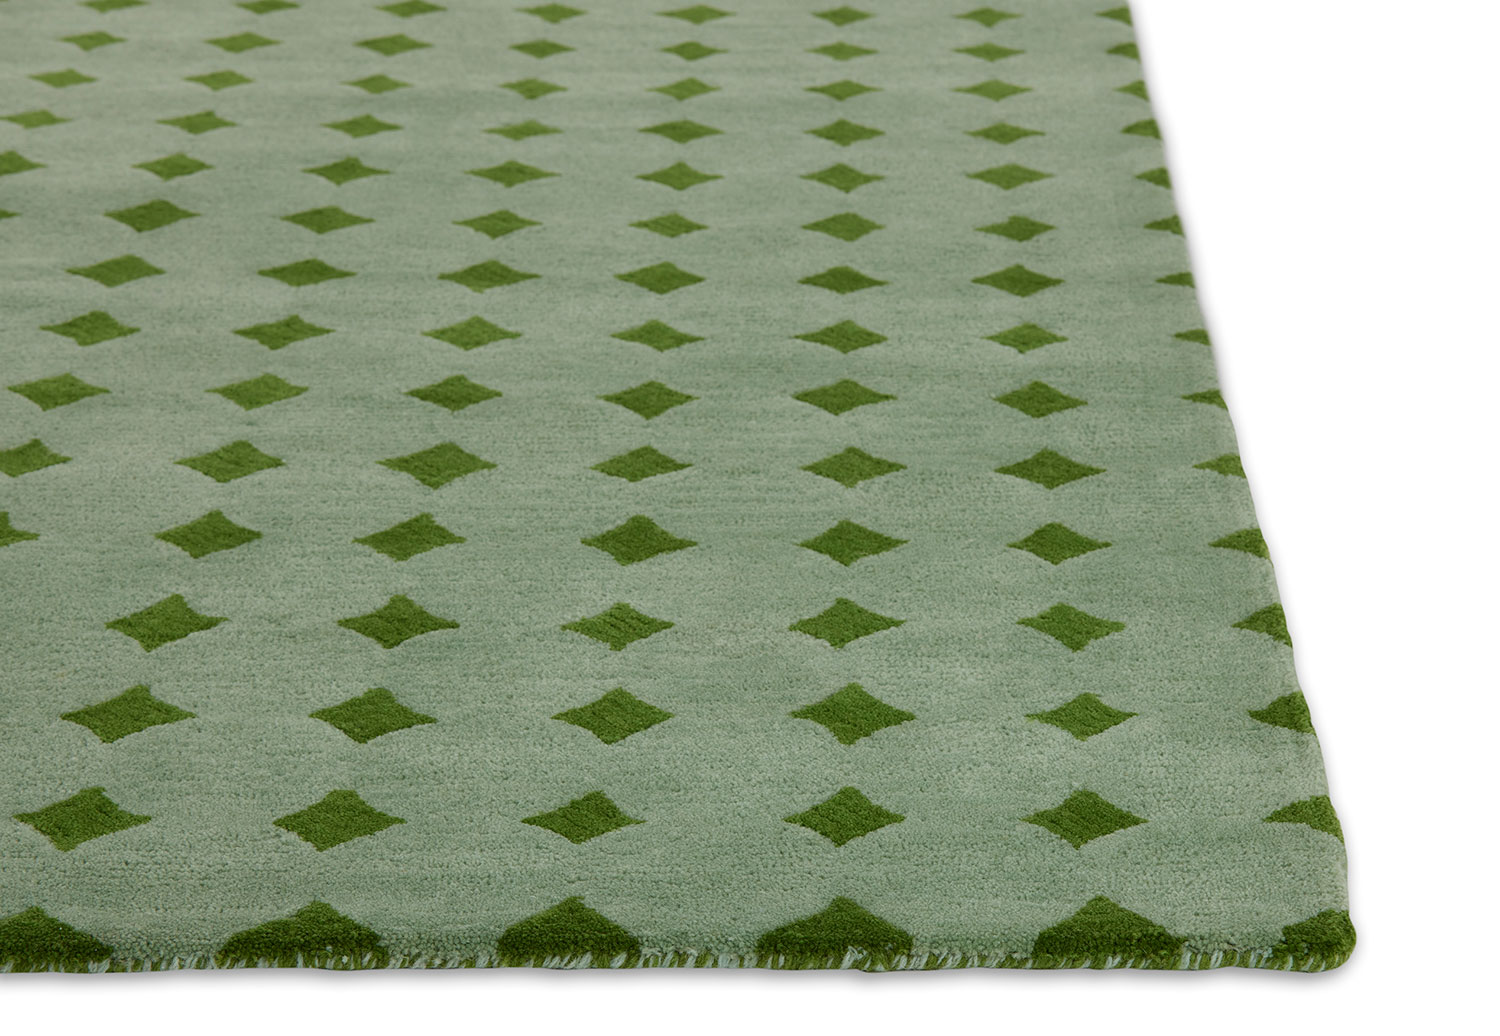 A close up corner of a green area rug called Bongo Fresca